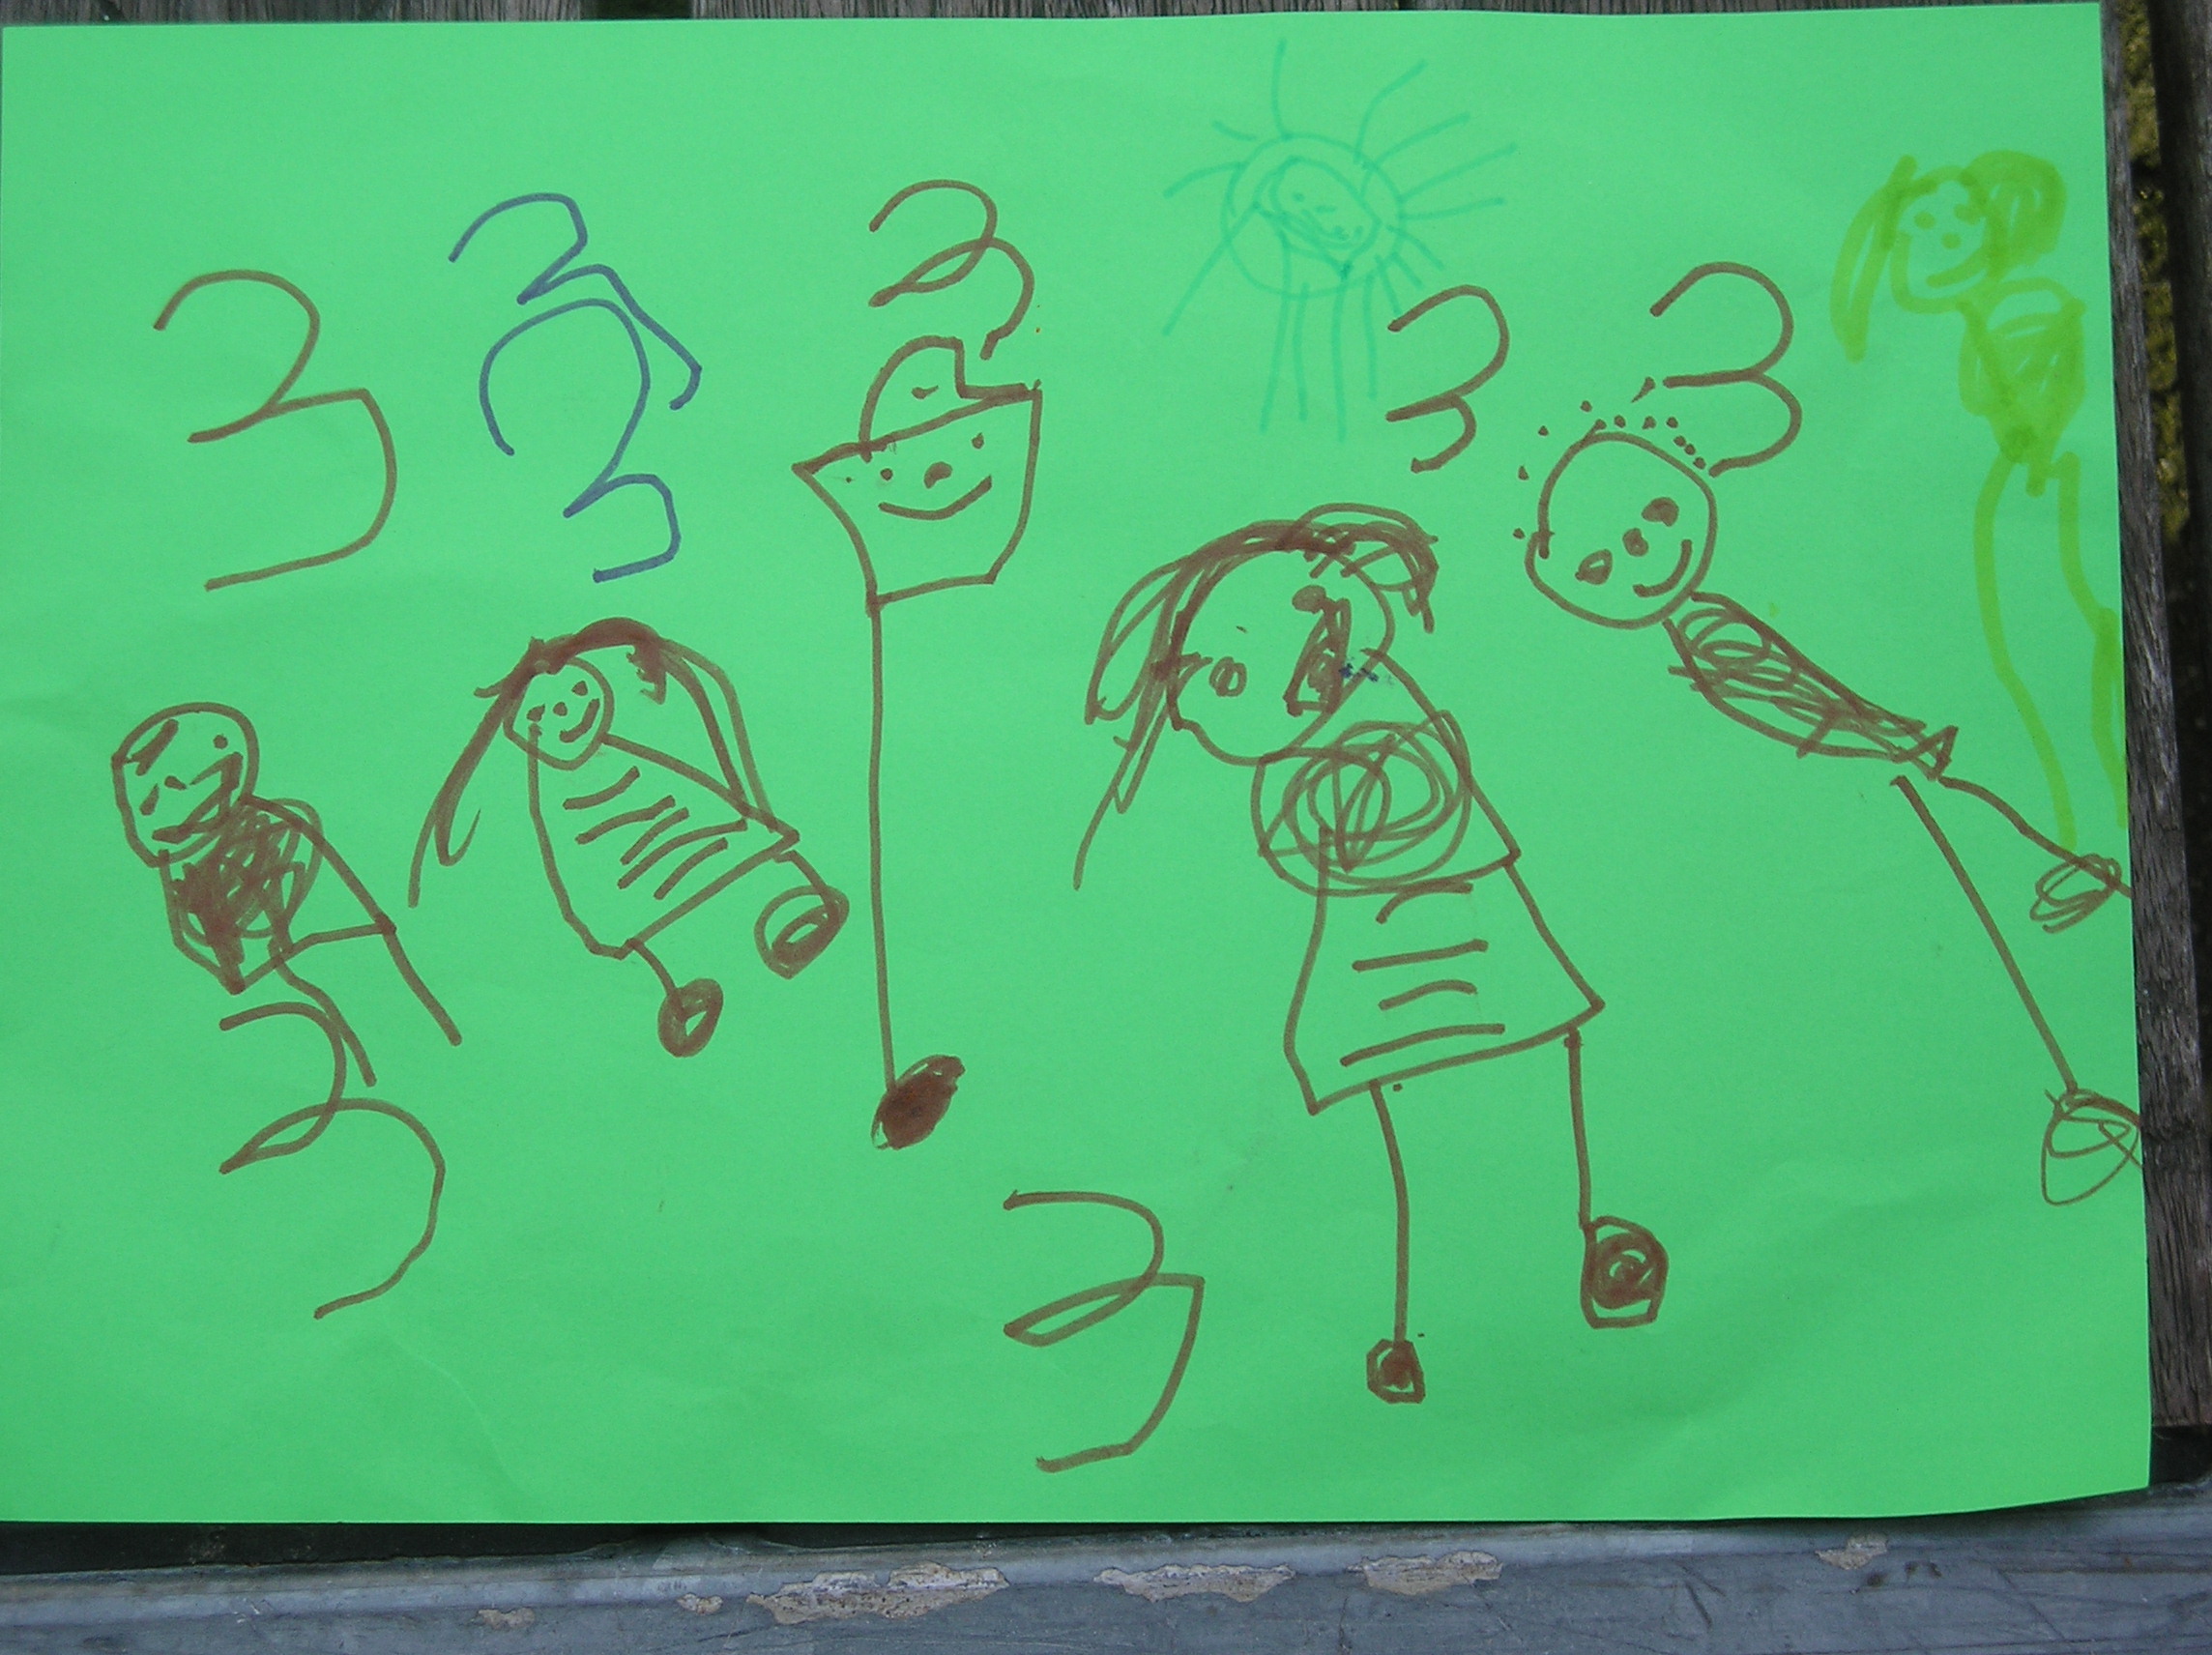 An artist's impression (Zeena, age 3)